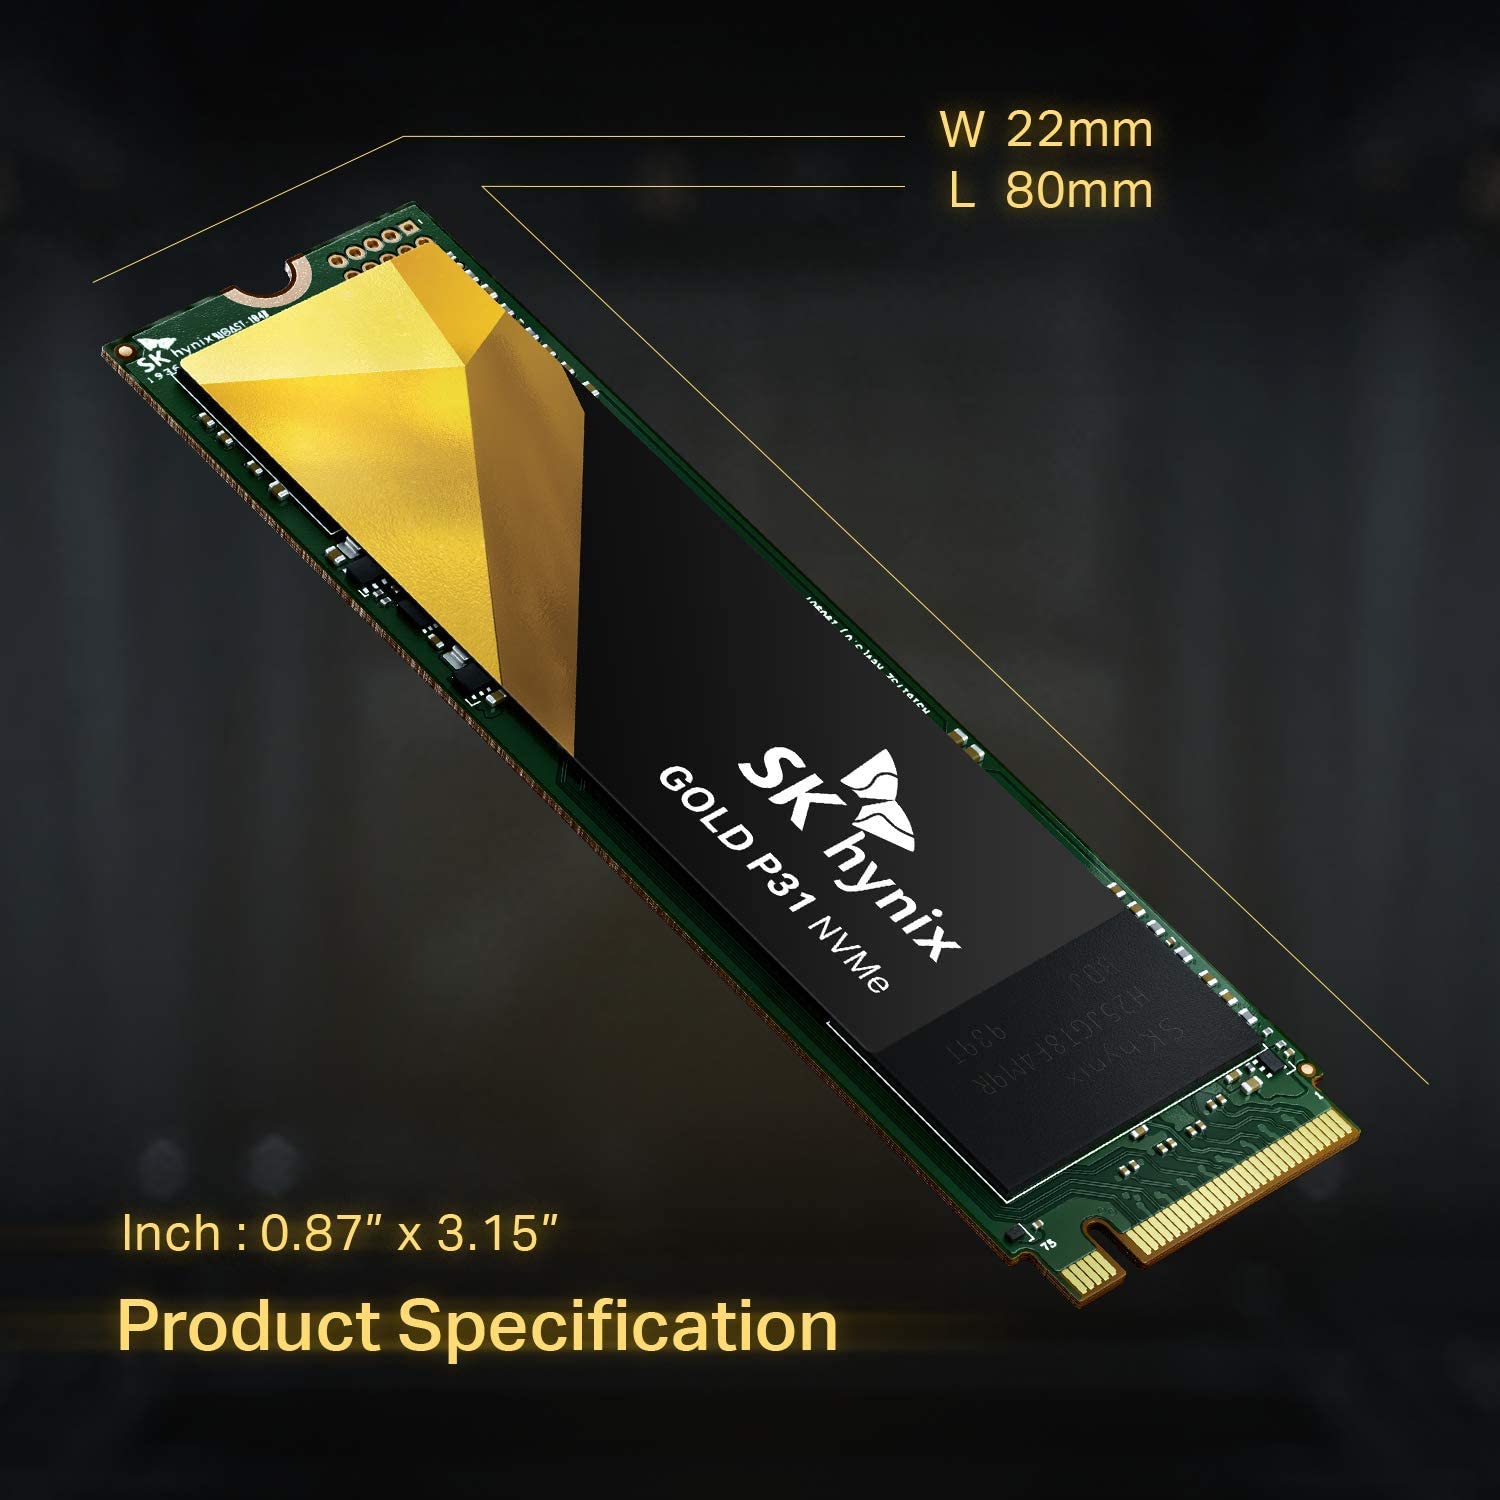 SK hynix Gold P31 500GB